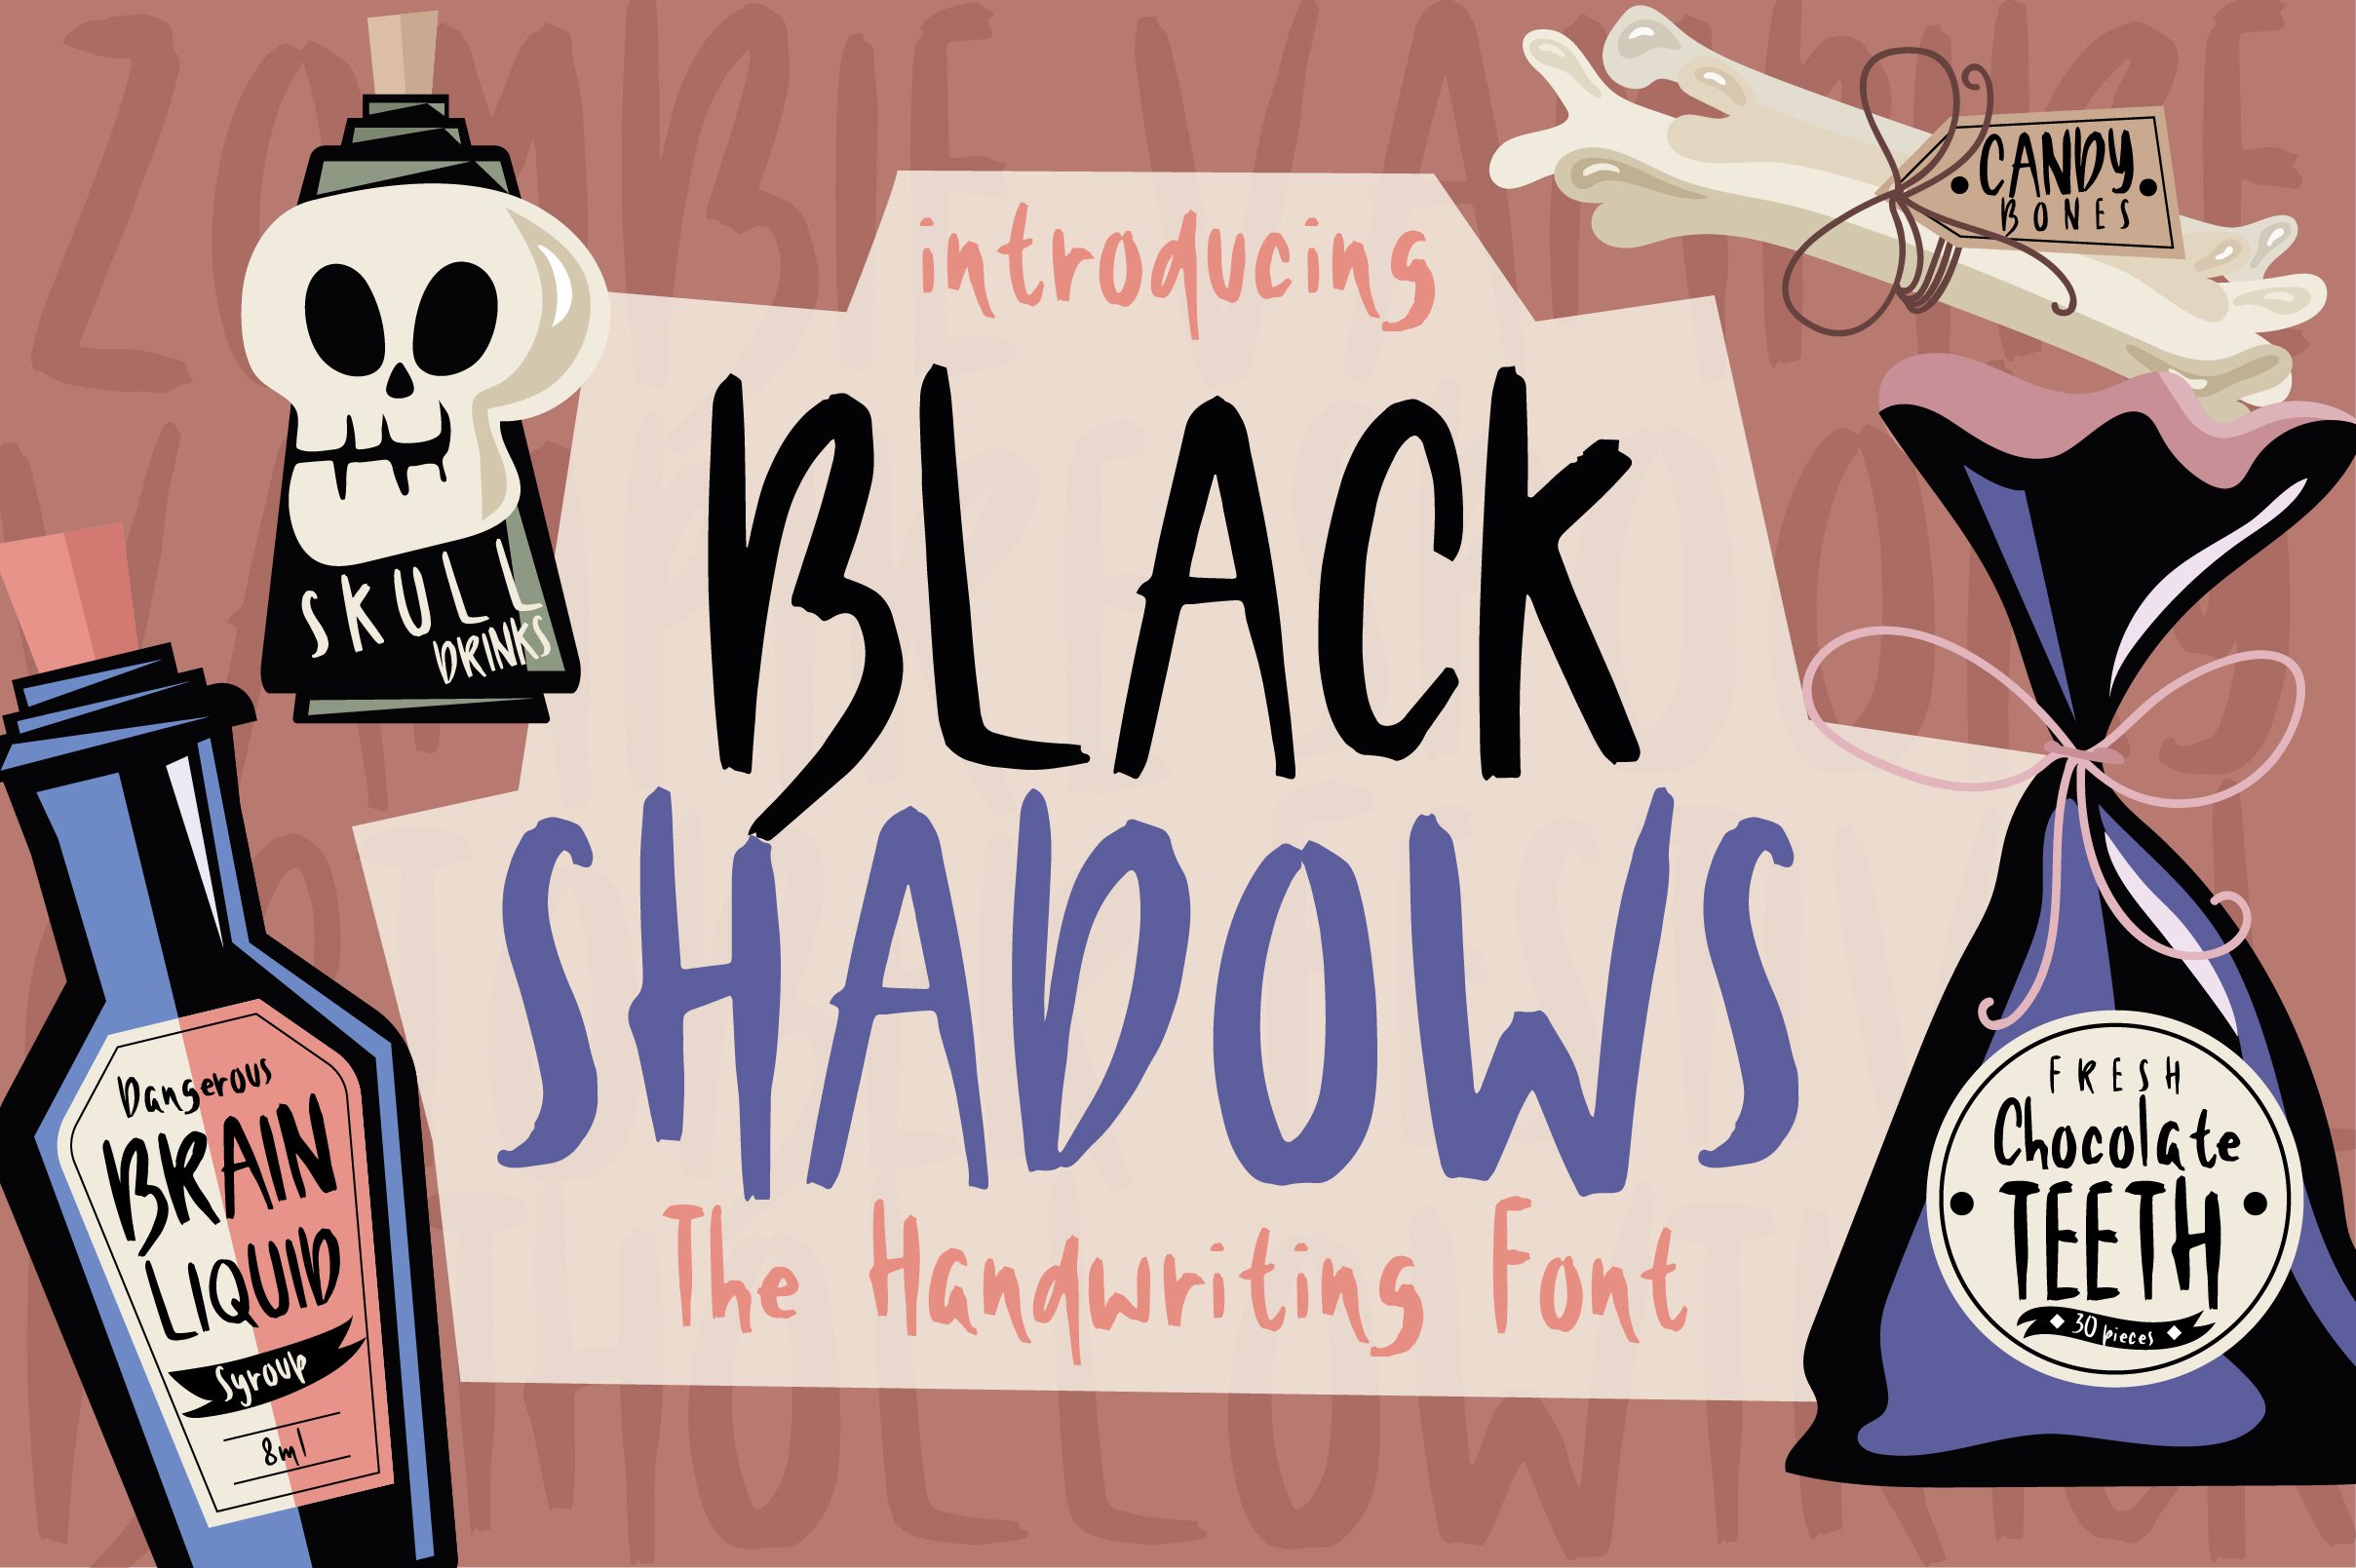 Black Shadows Font cover image.